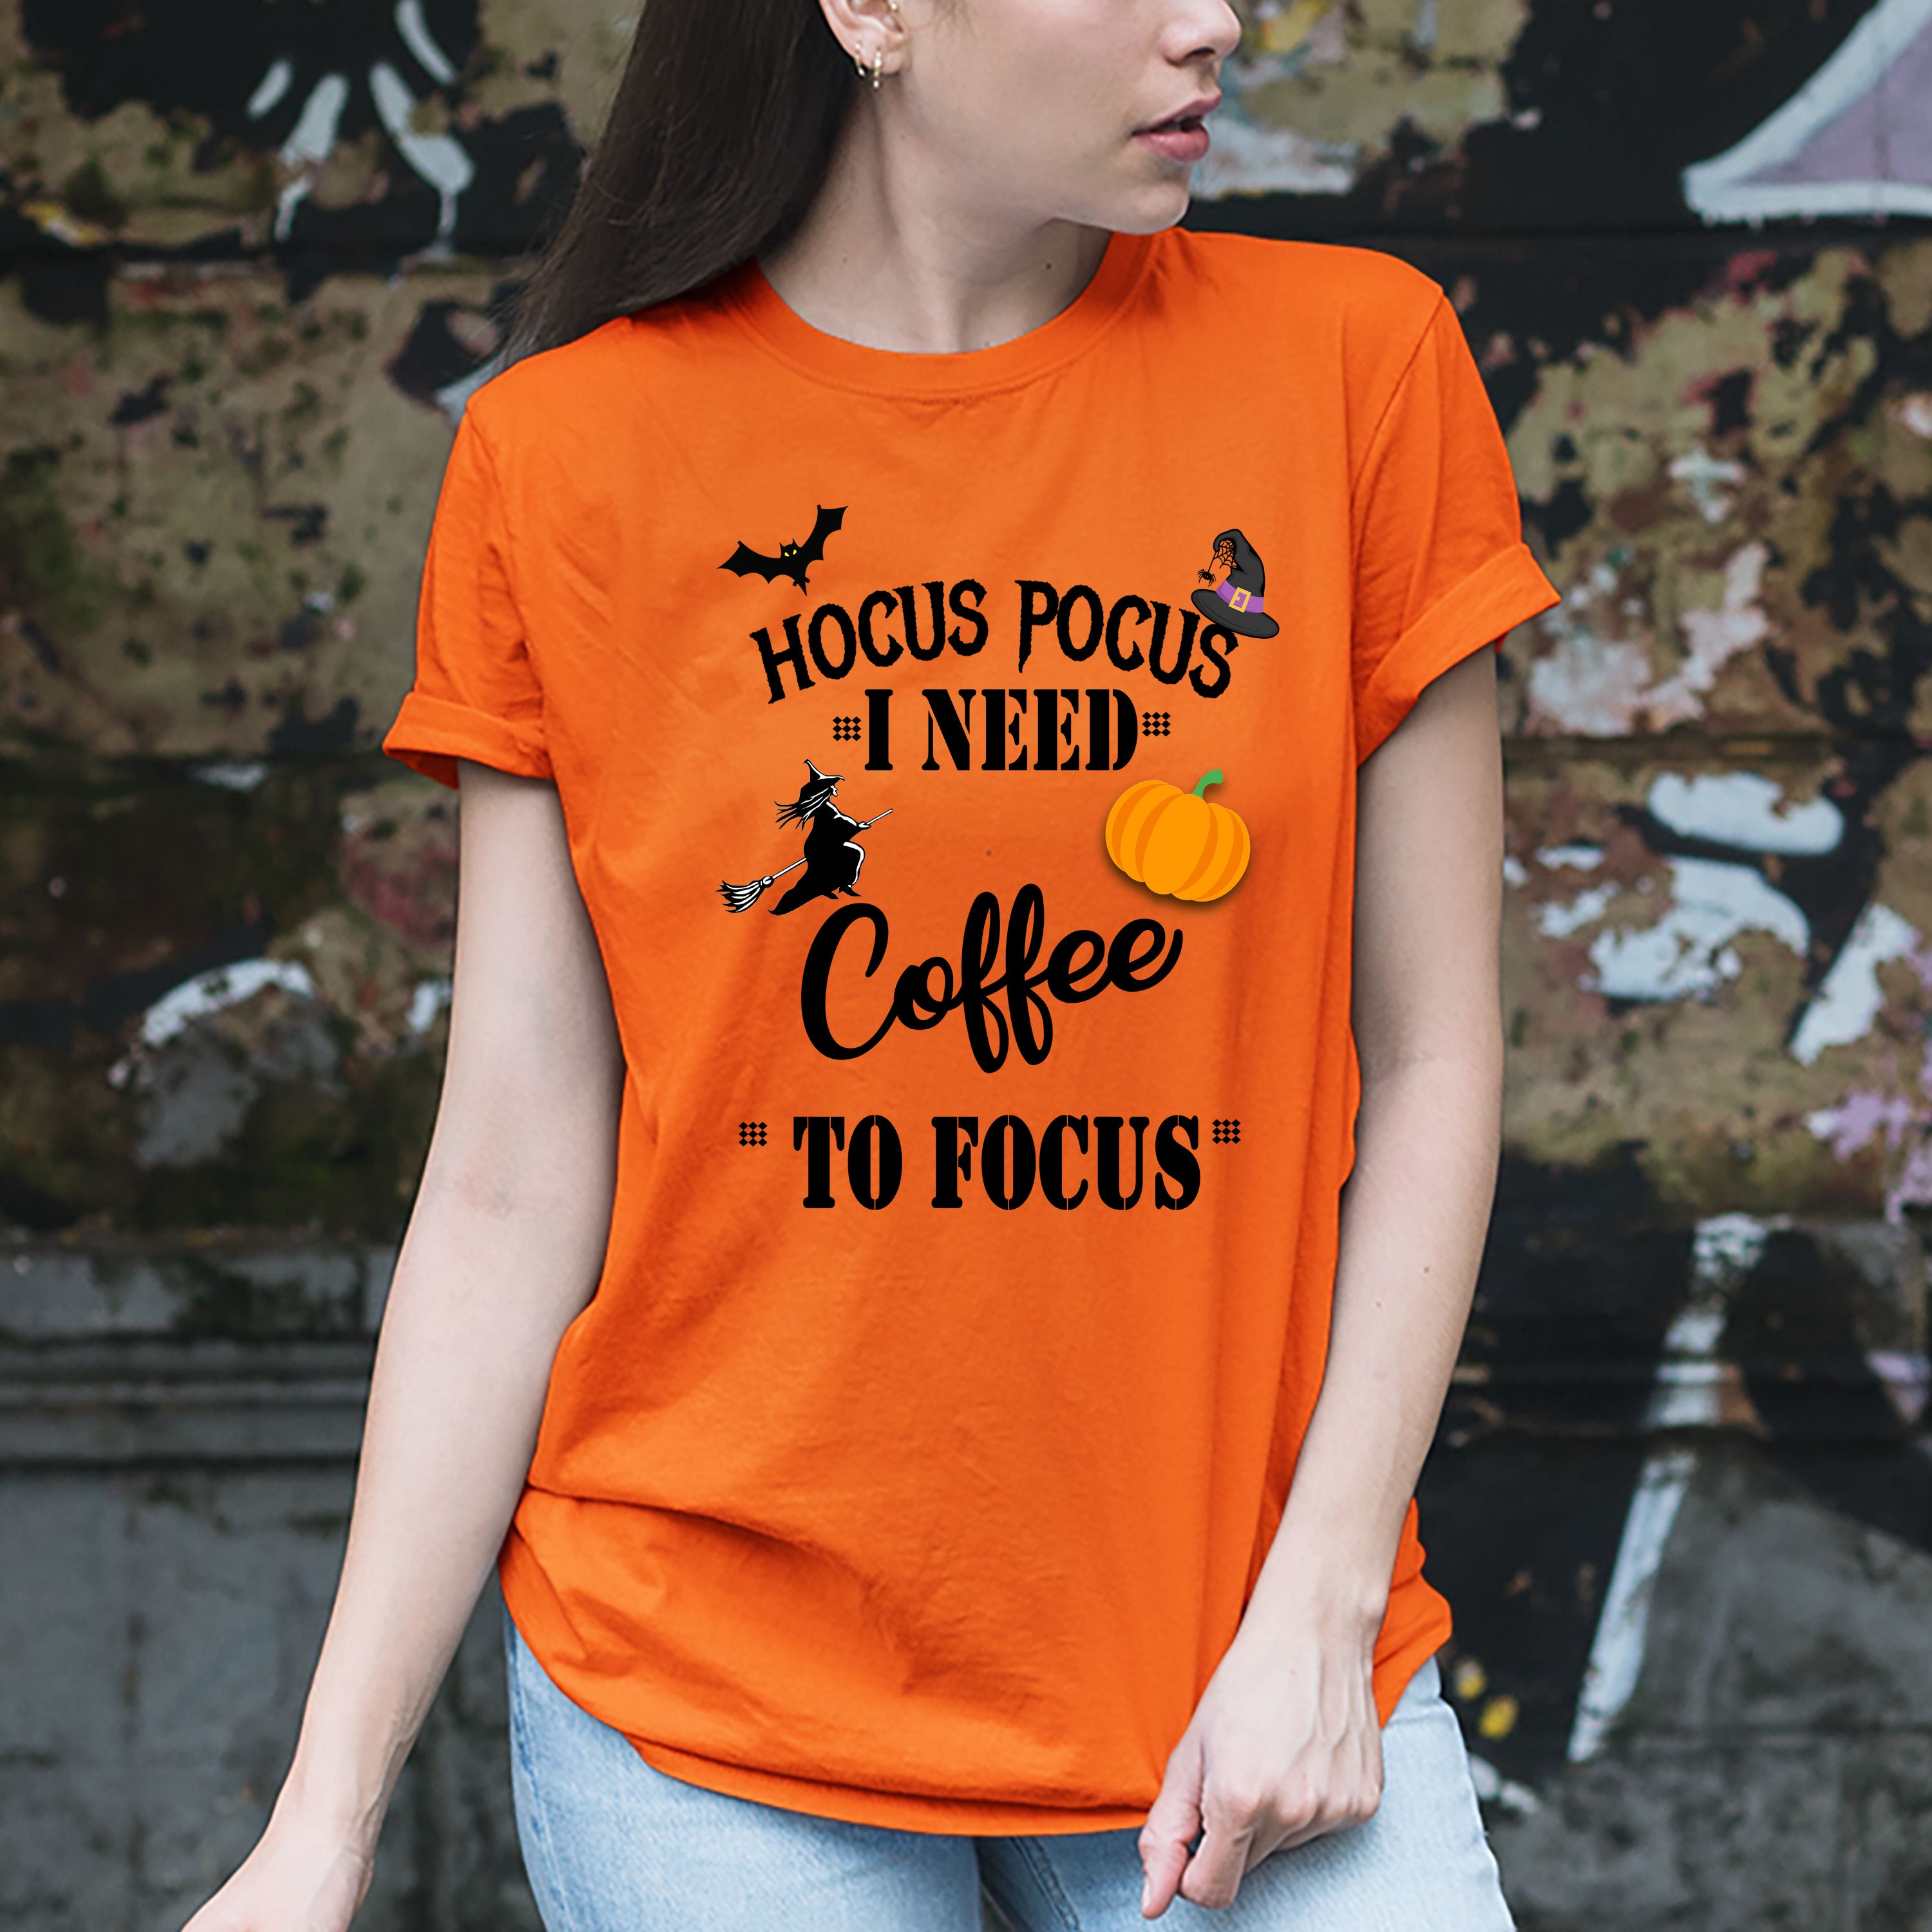 "HOCUS POCUS I NEED COFFEE TO FOCUS"